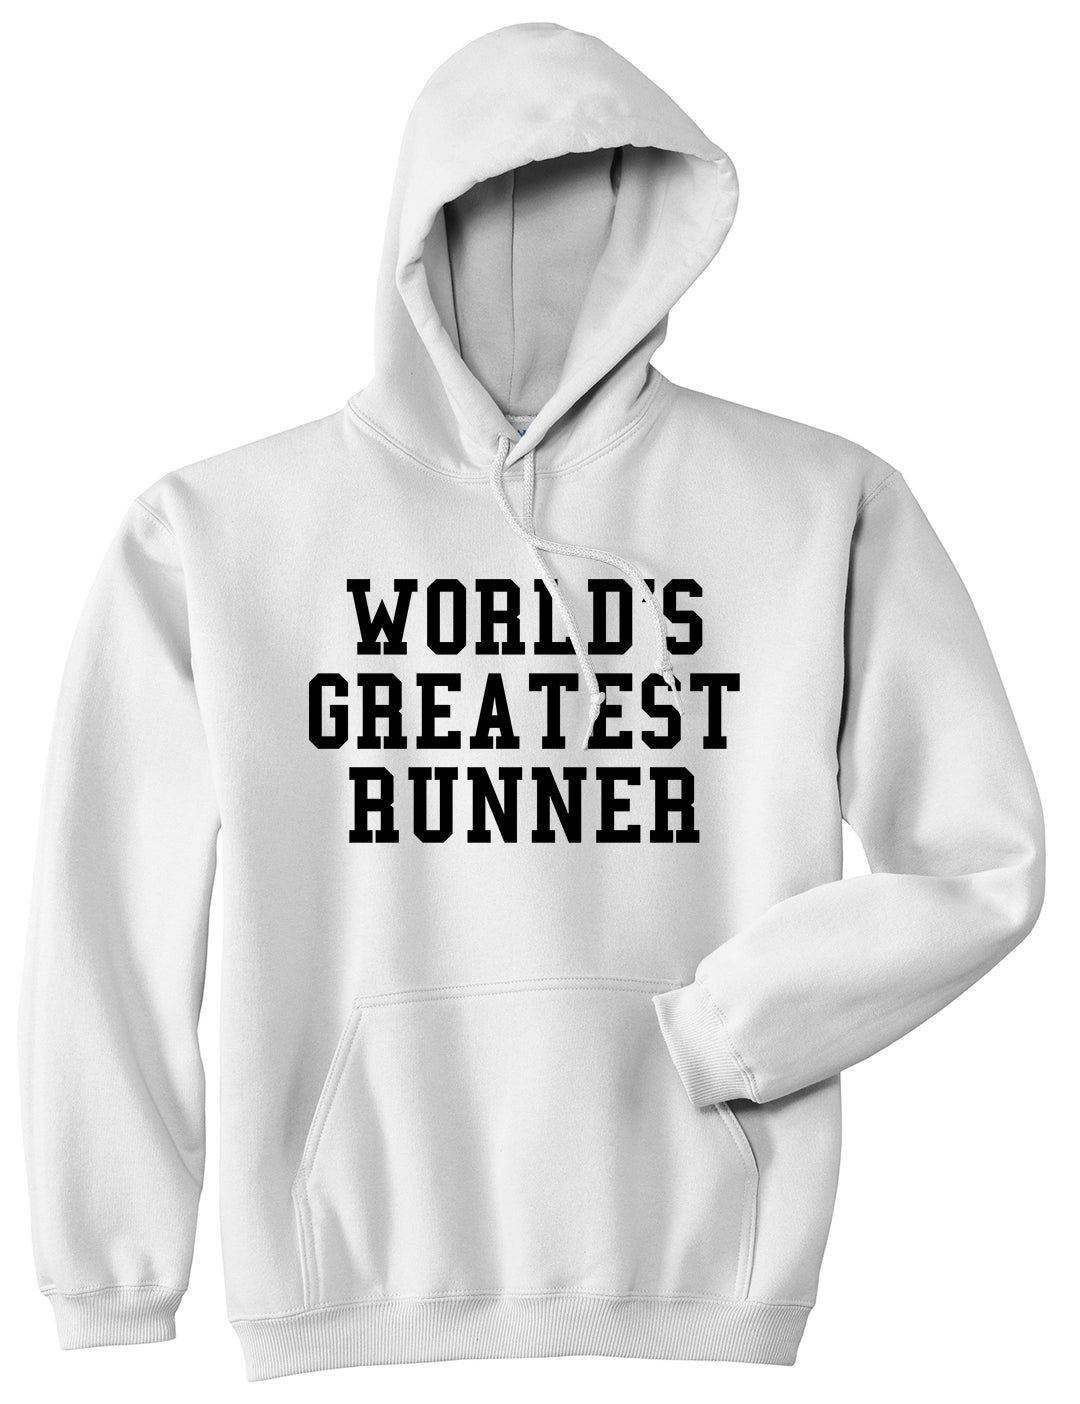 Worlds Greatest Runner Funny Fitness Mens Pullover Hoodie White